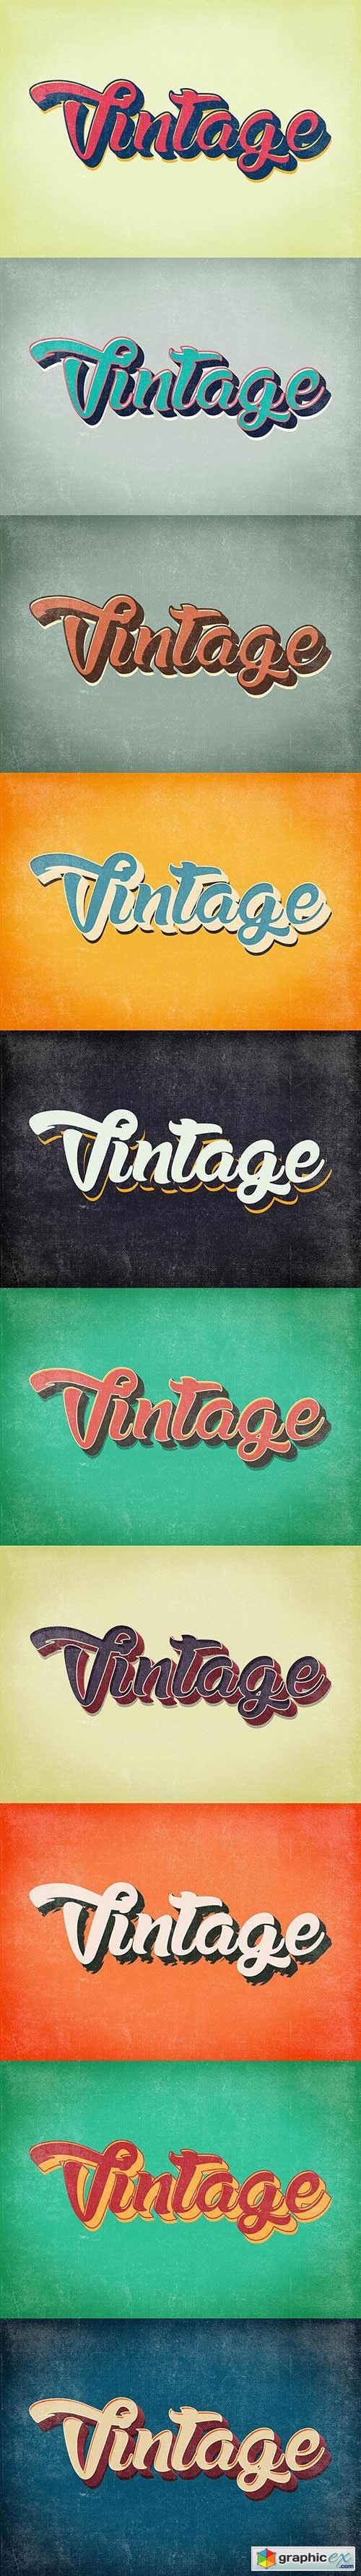 Vintage & Retro Text Styles